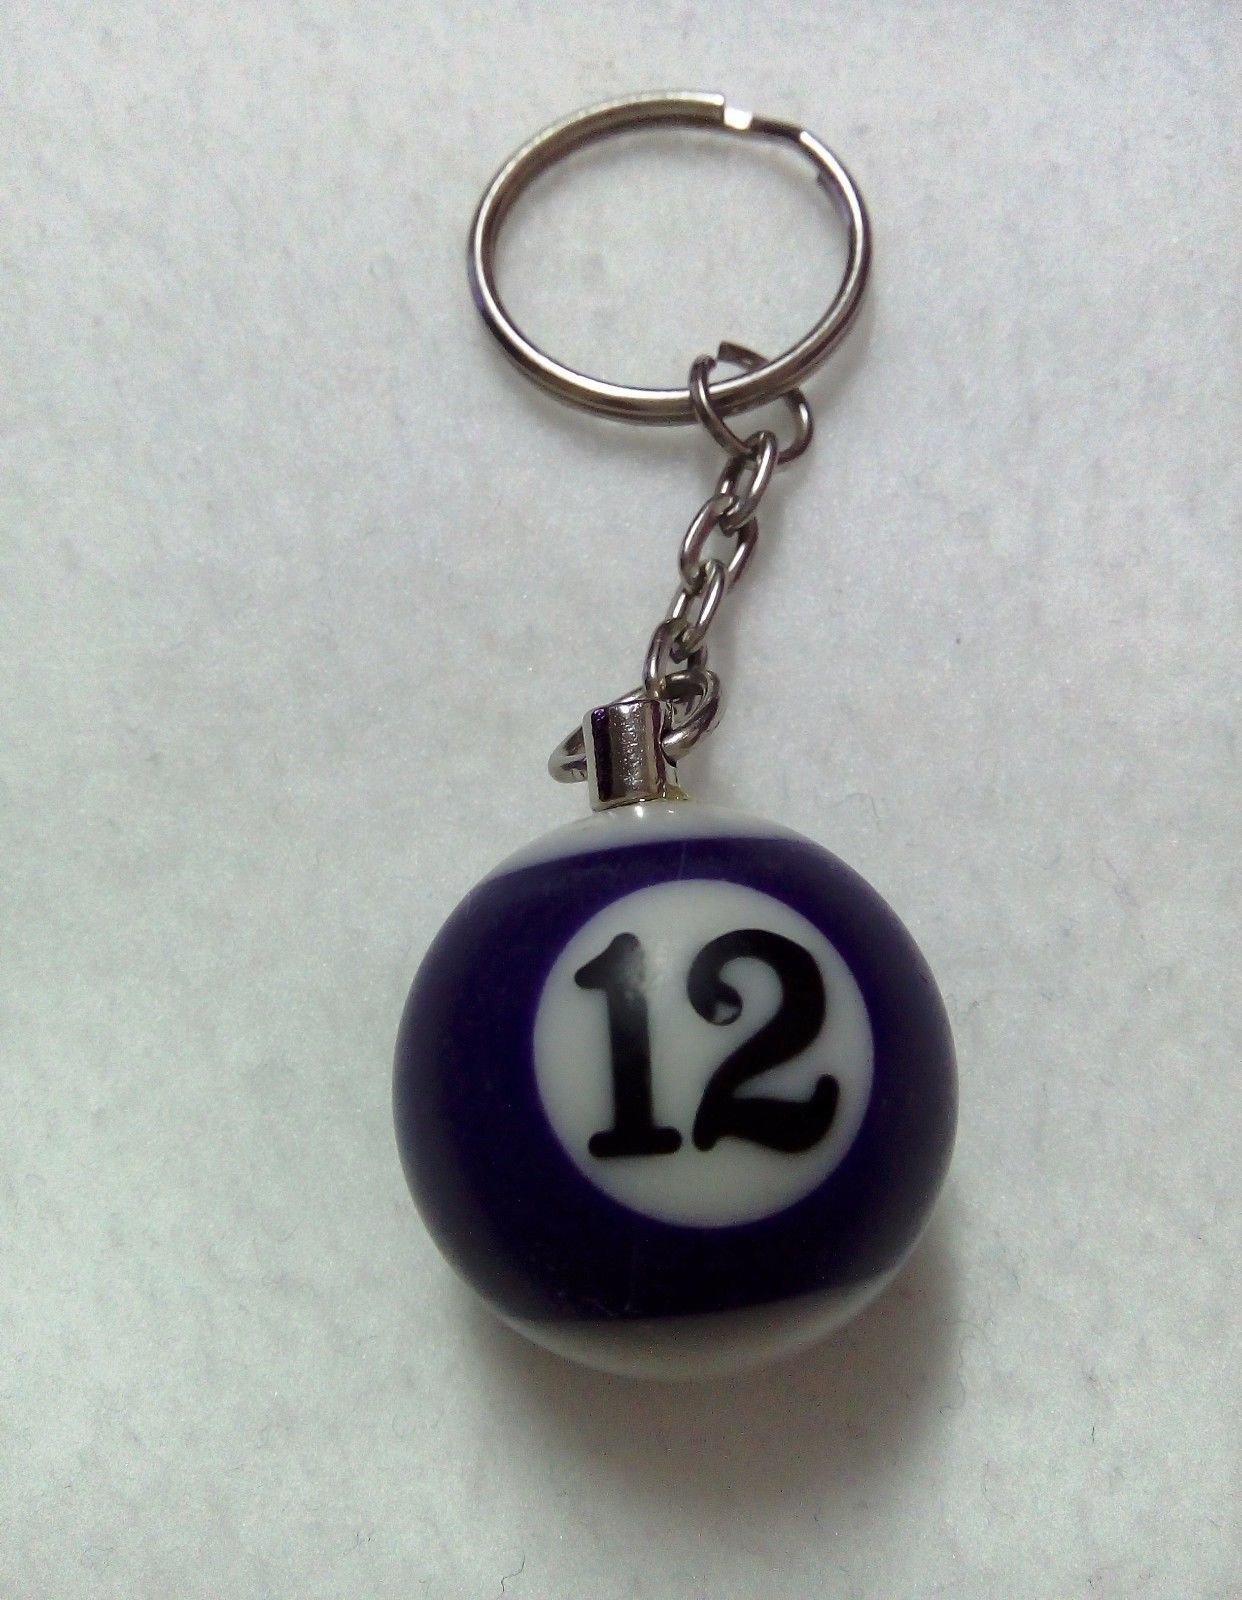 Billiard ball key chain key ring lucky number 12 - $5.47